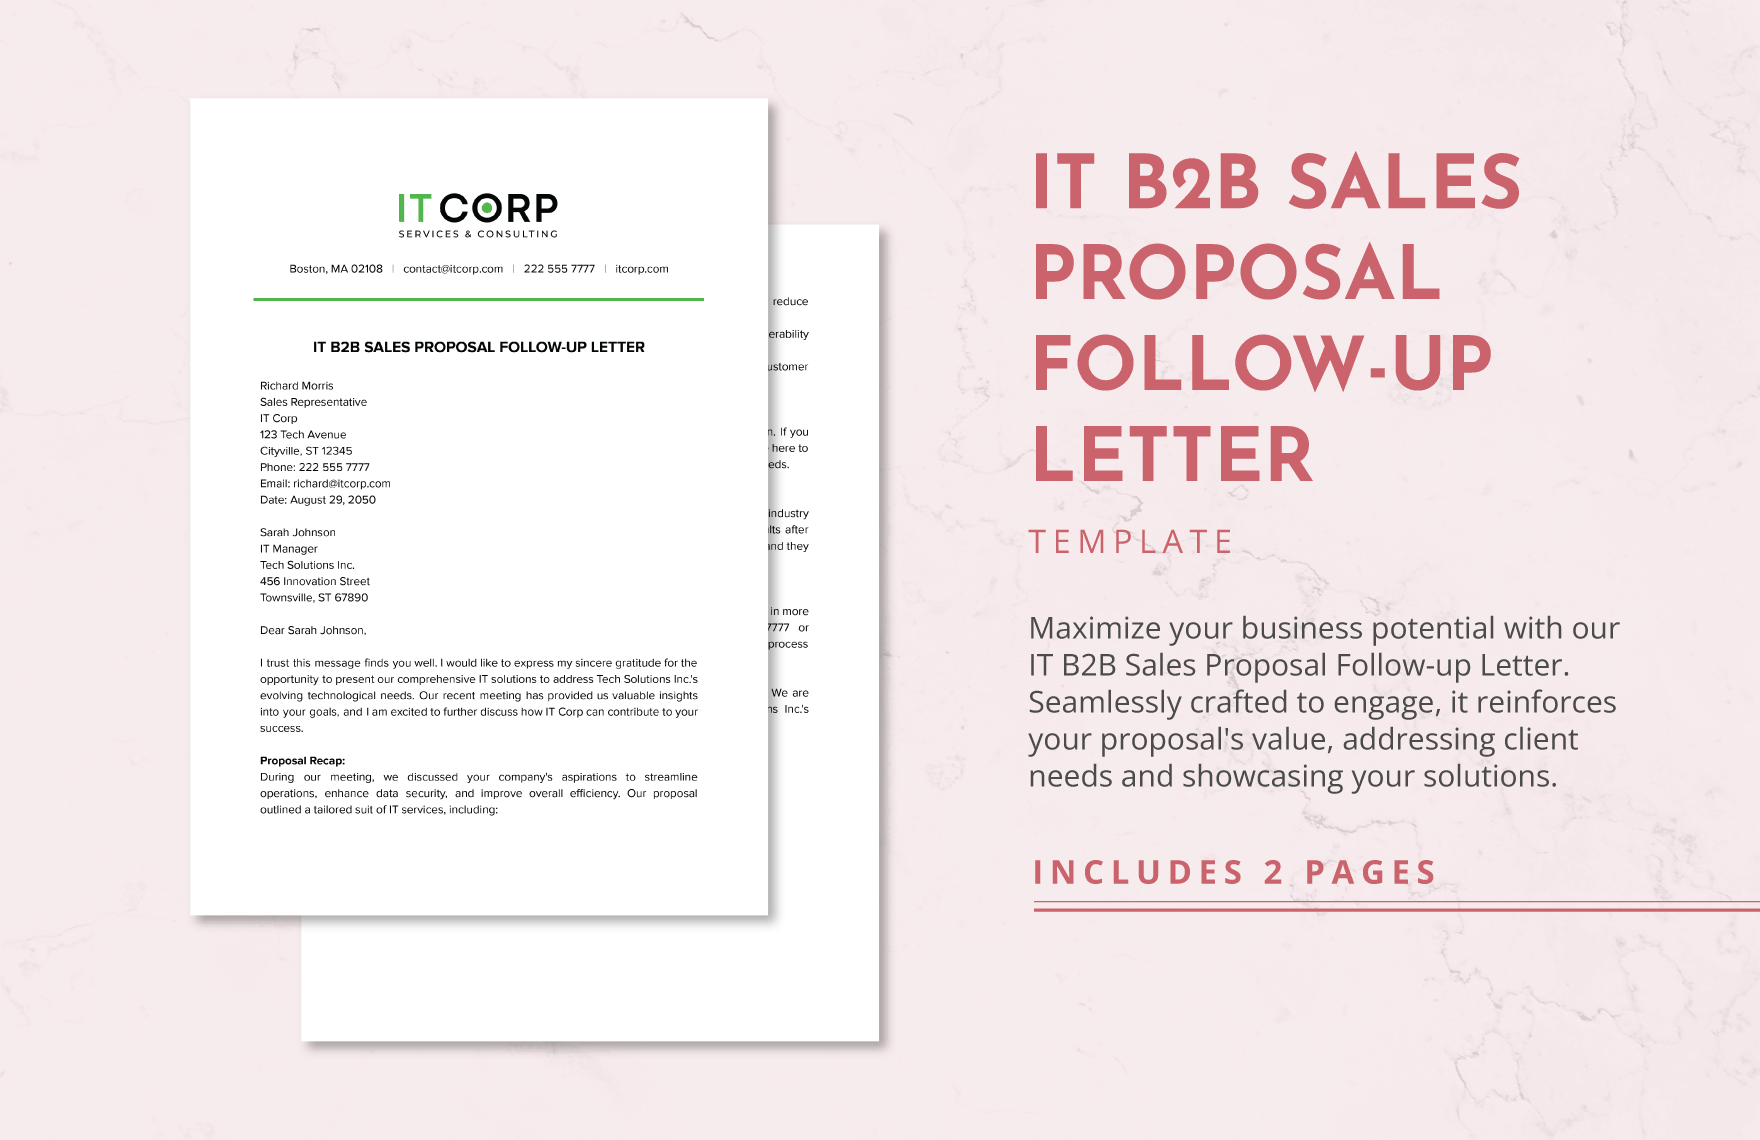 IT B2B Sales Proposal Follow-up Letter Template